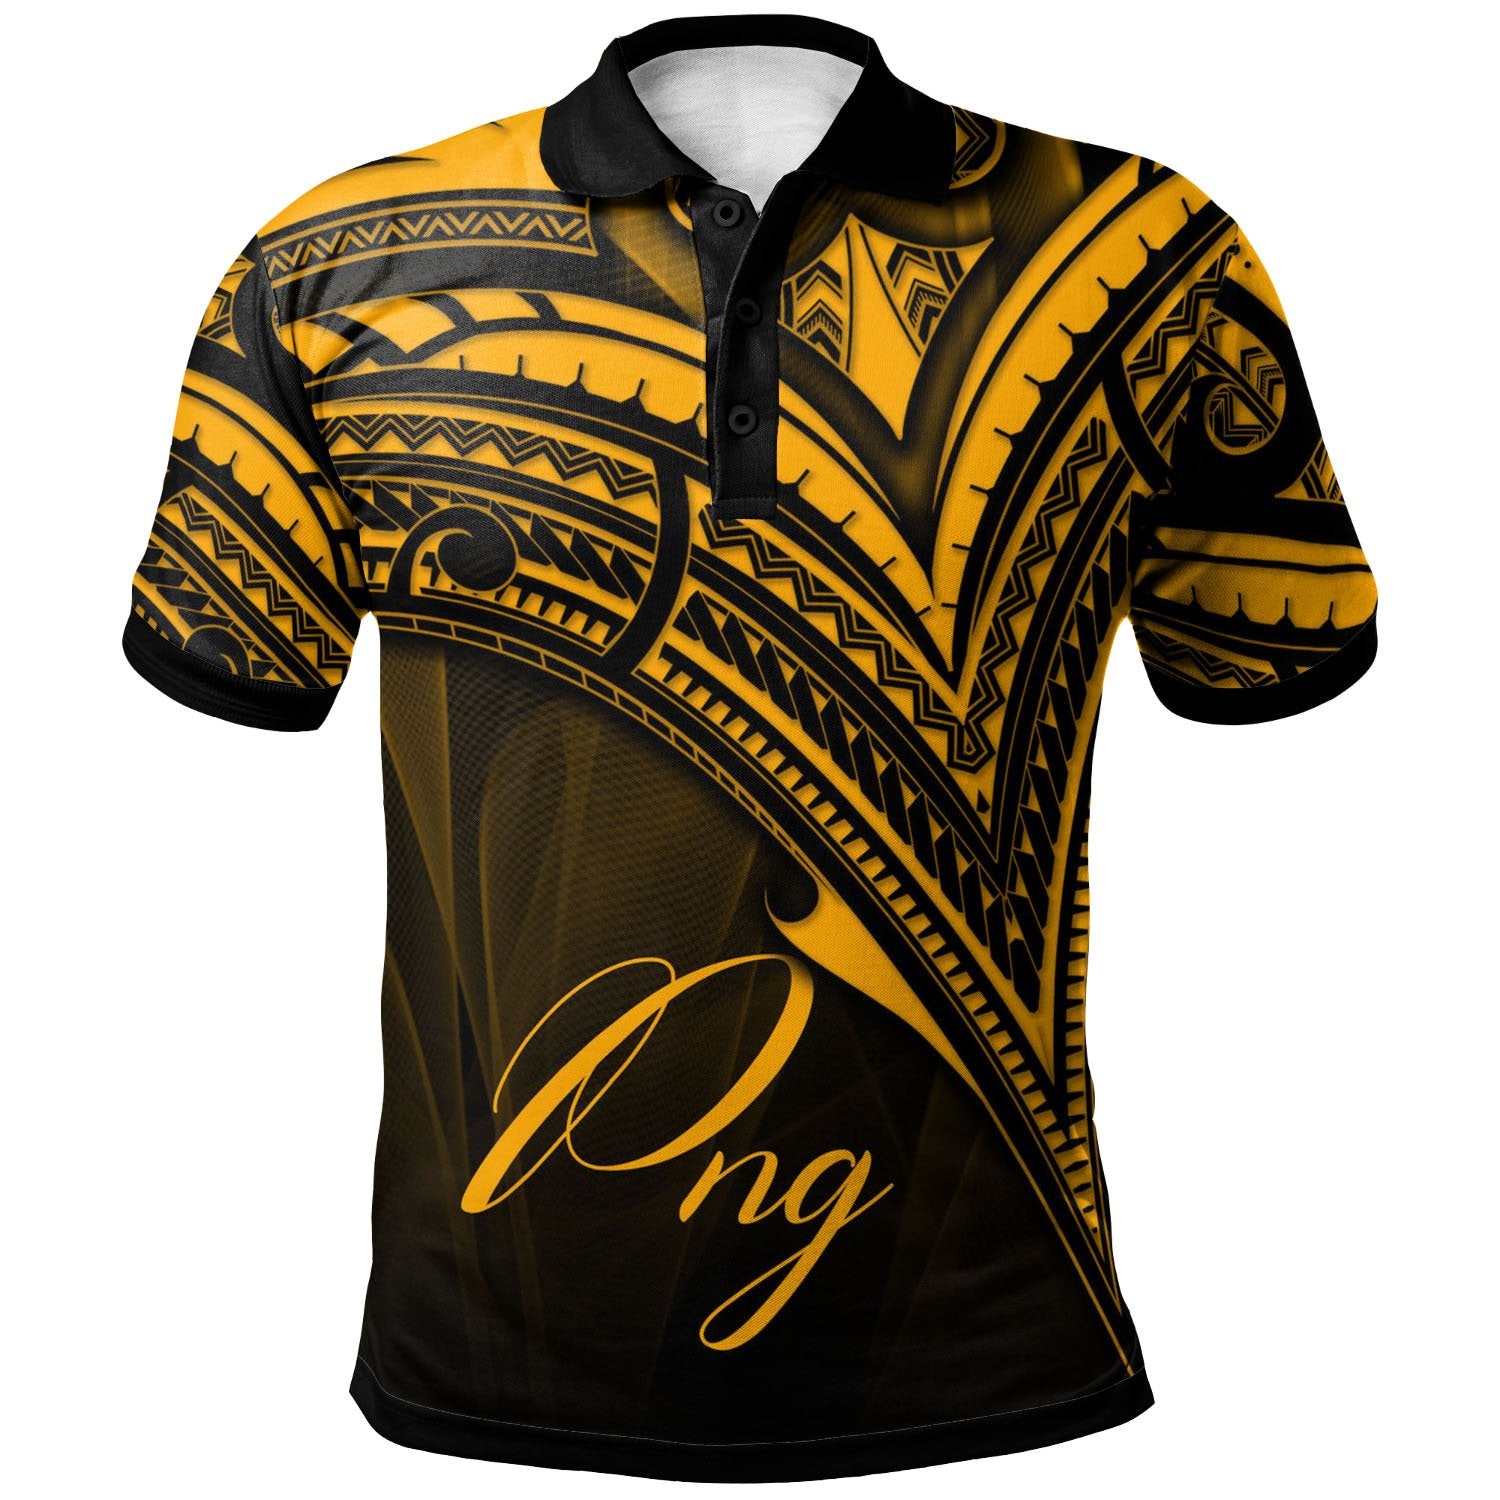 Papua New Guinea Polo Shirt Gold Color Cross Style Unisex Black - Polynesian Pride